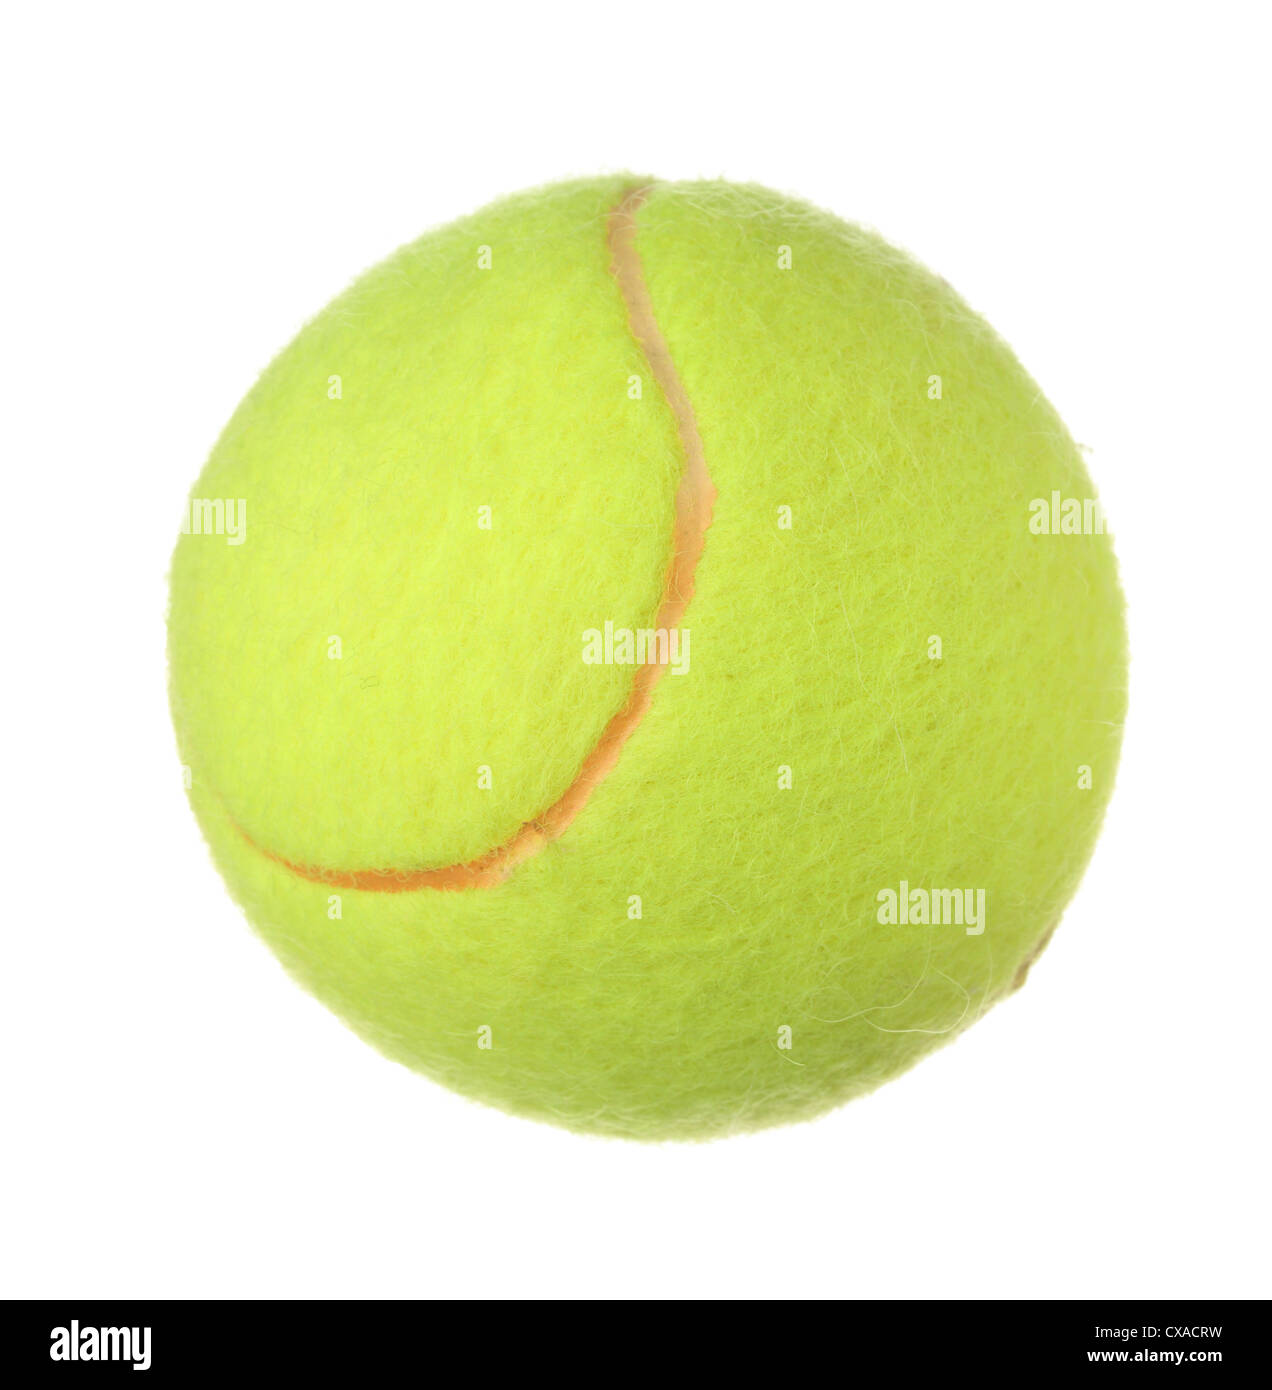 Tennis ball isolated on white Stock Photo